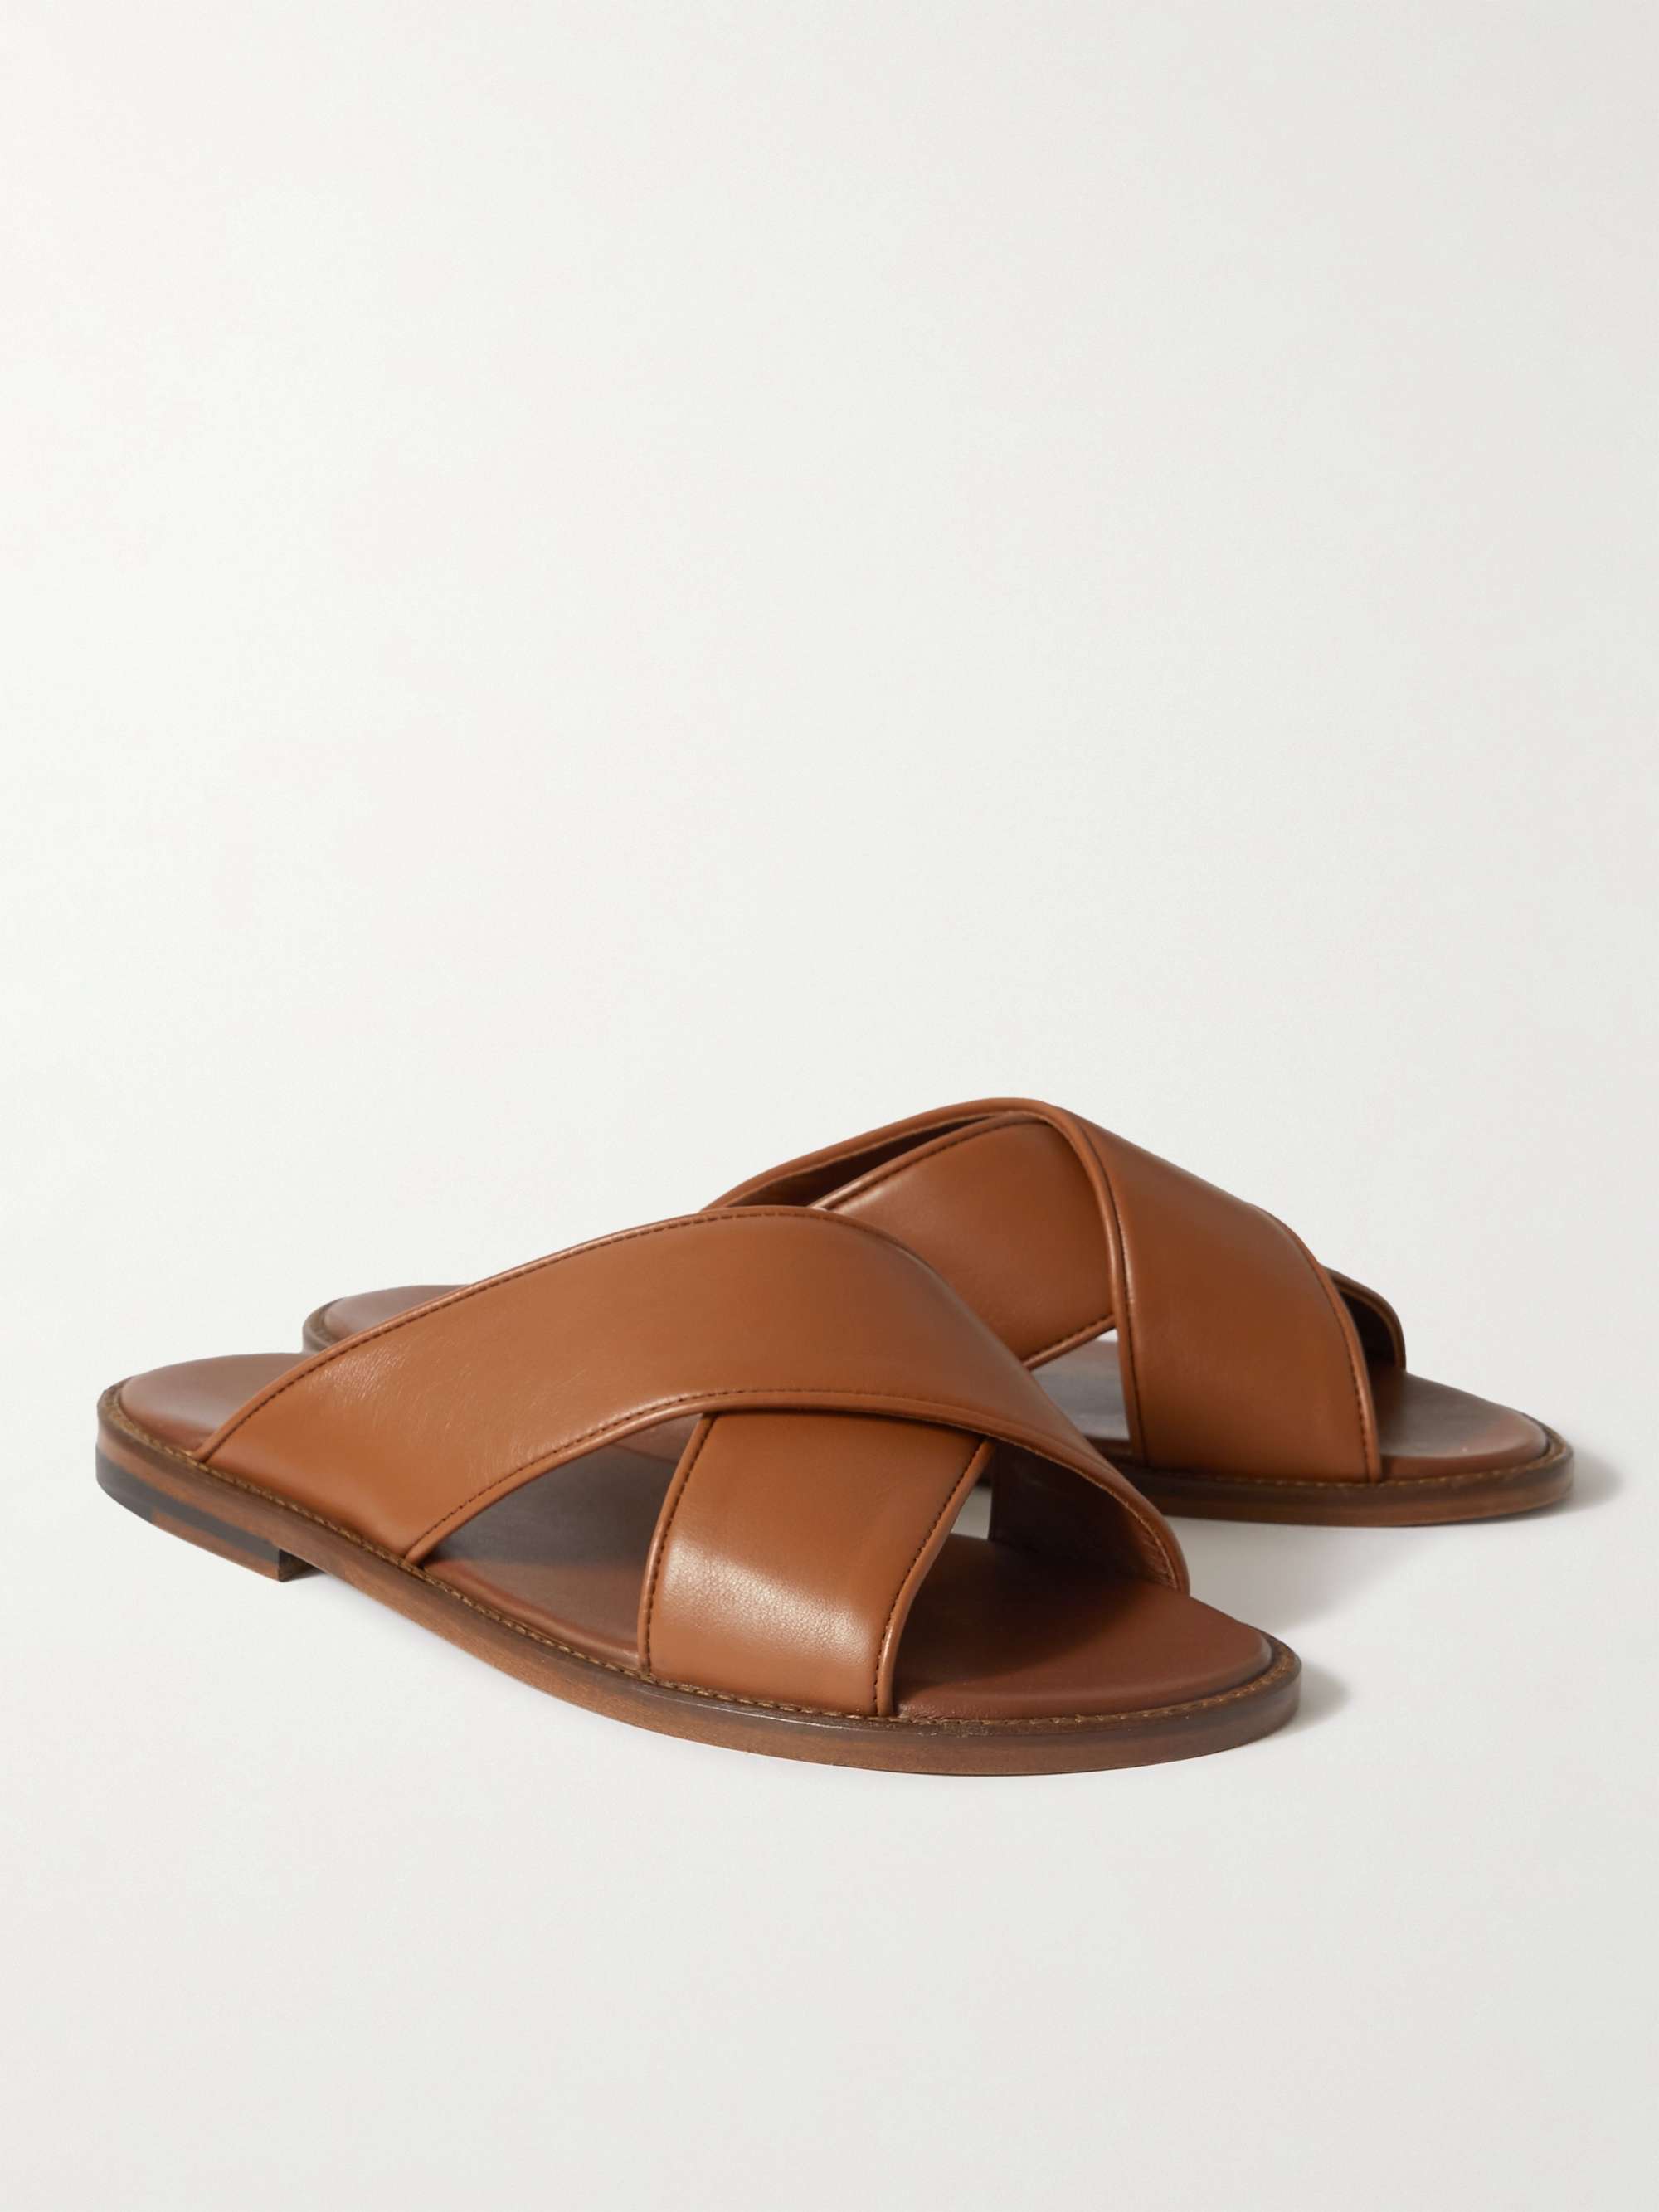 MANOLO BLAHNIK Otawi Leather Sandals